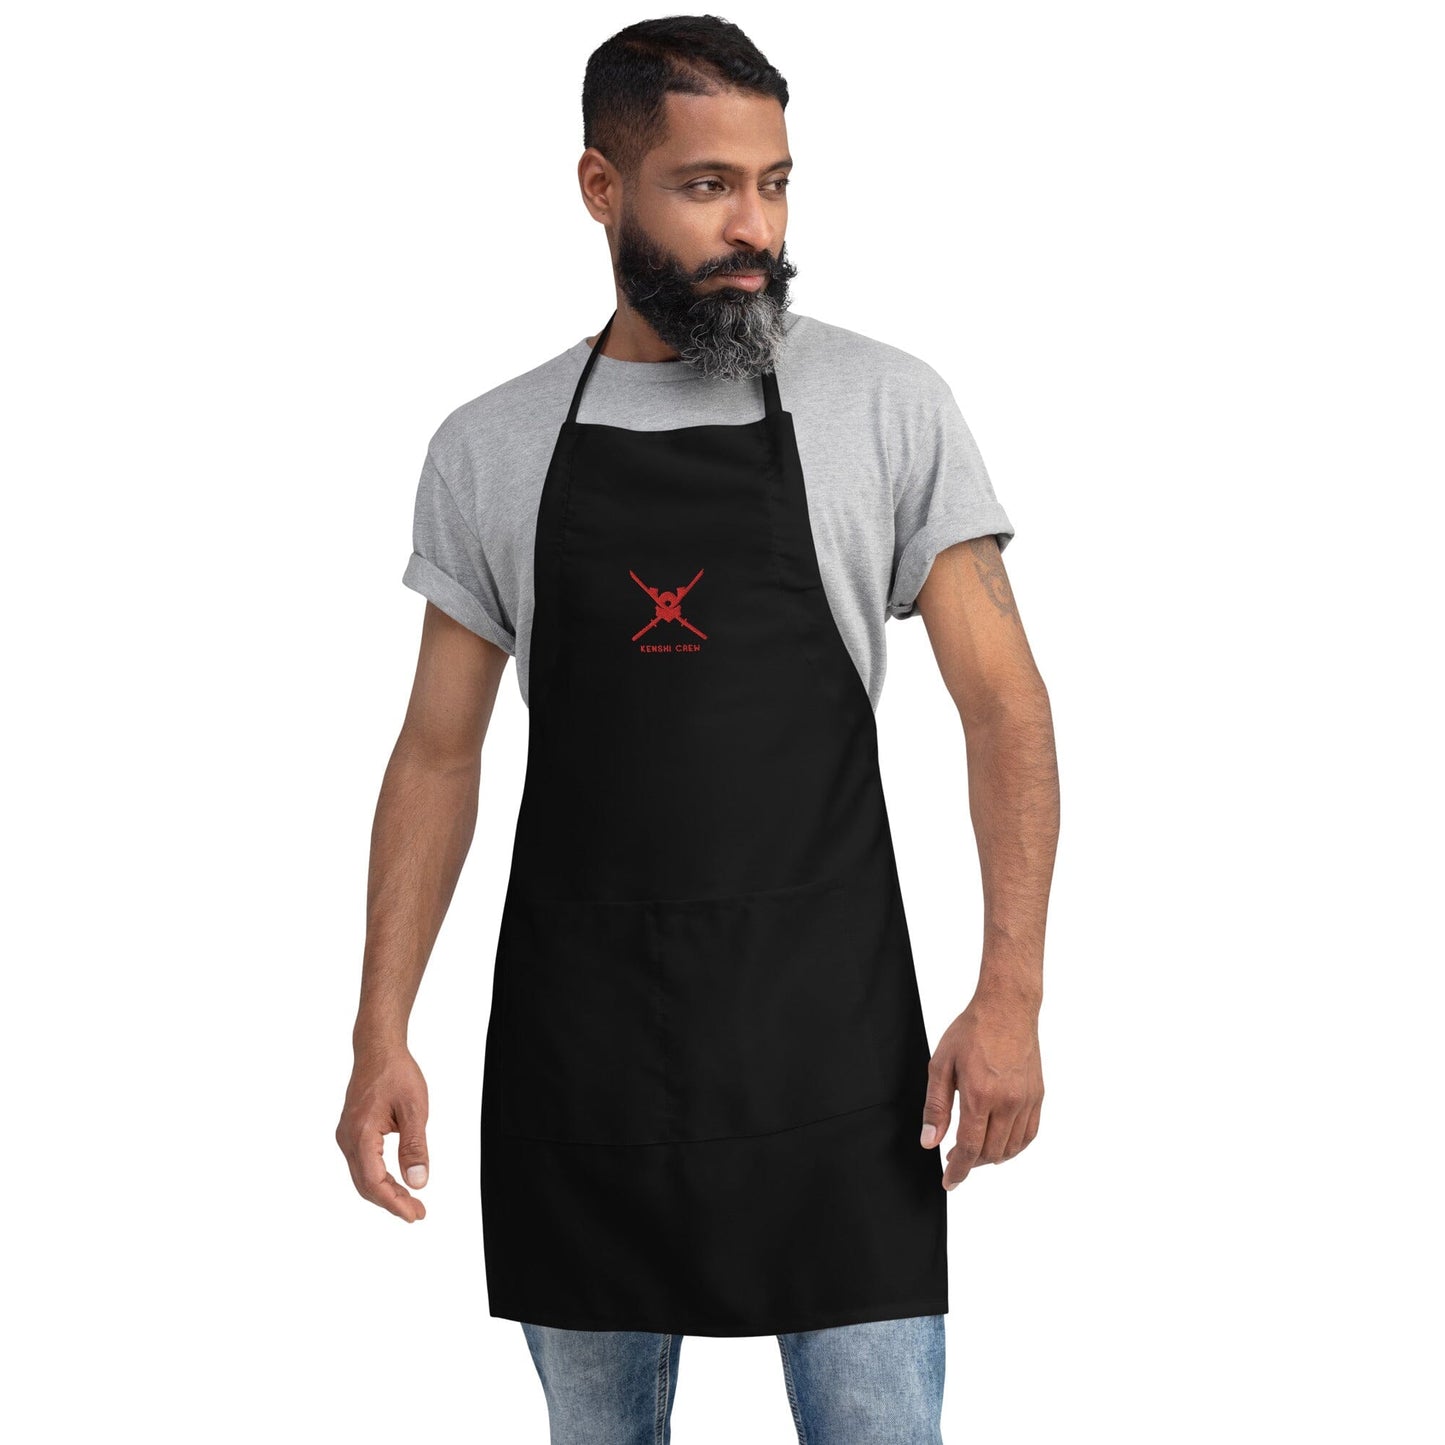 Kenshi Crew Embroidered Black Apron Cooker Clothes & Accessories Kenshi Crew 